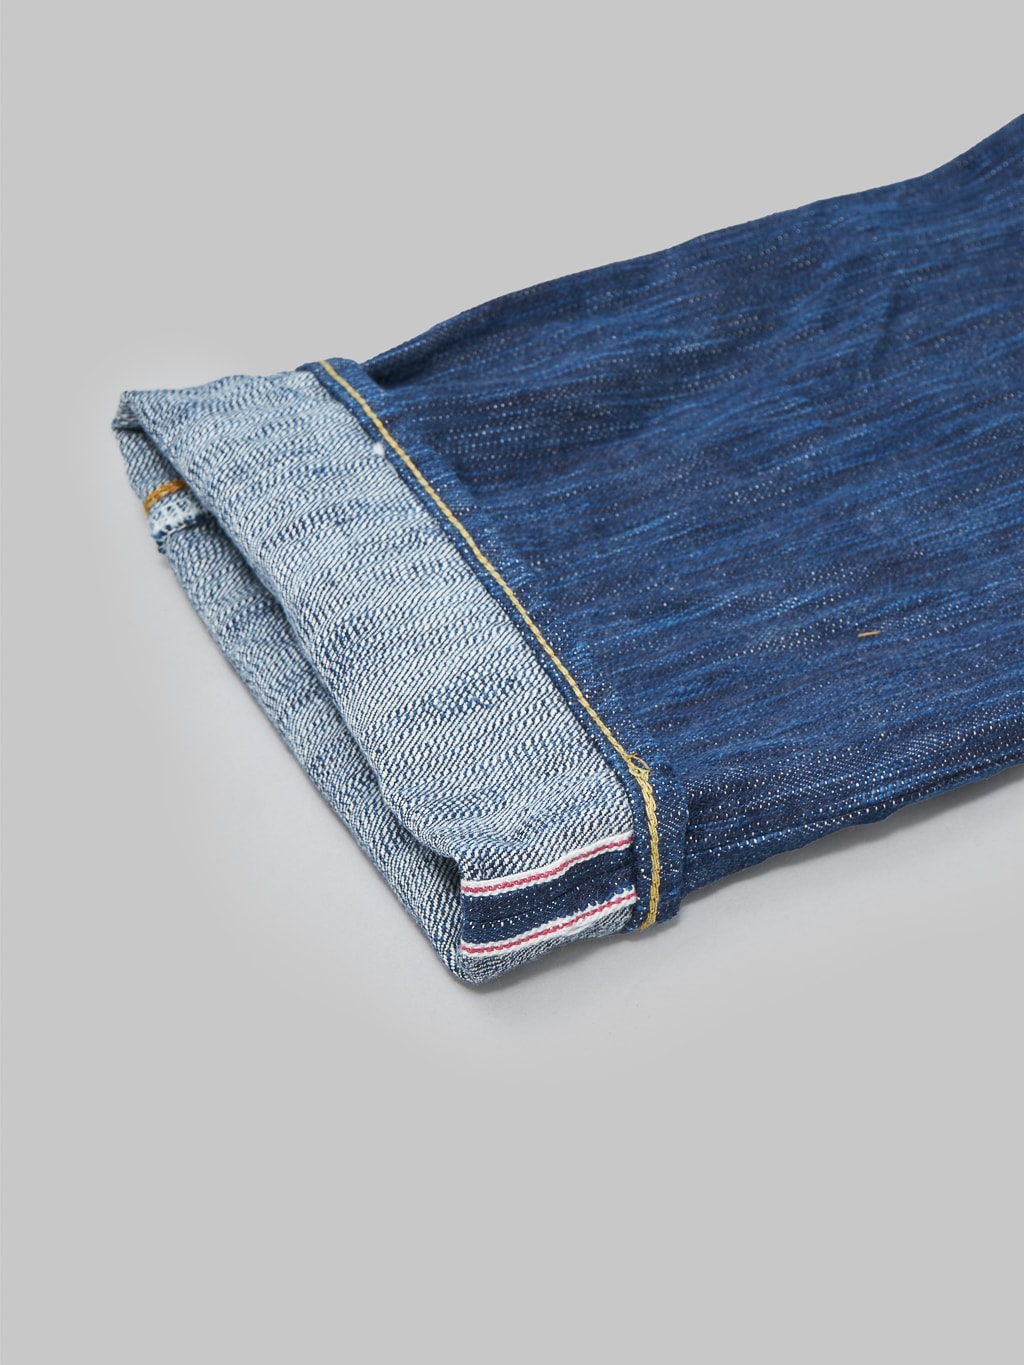 Studio dartisan tokushima awa shoai regular straight jeans selvedge stitching